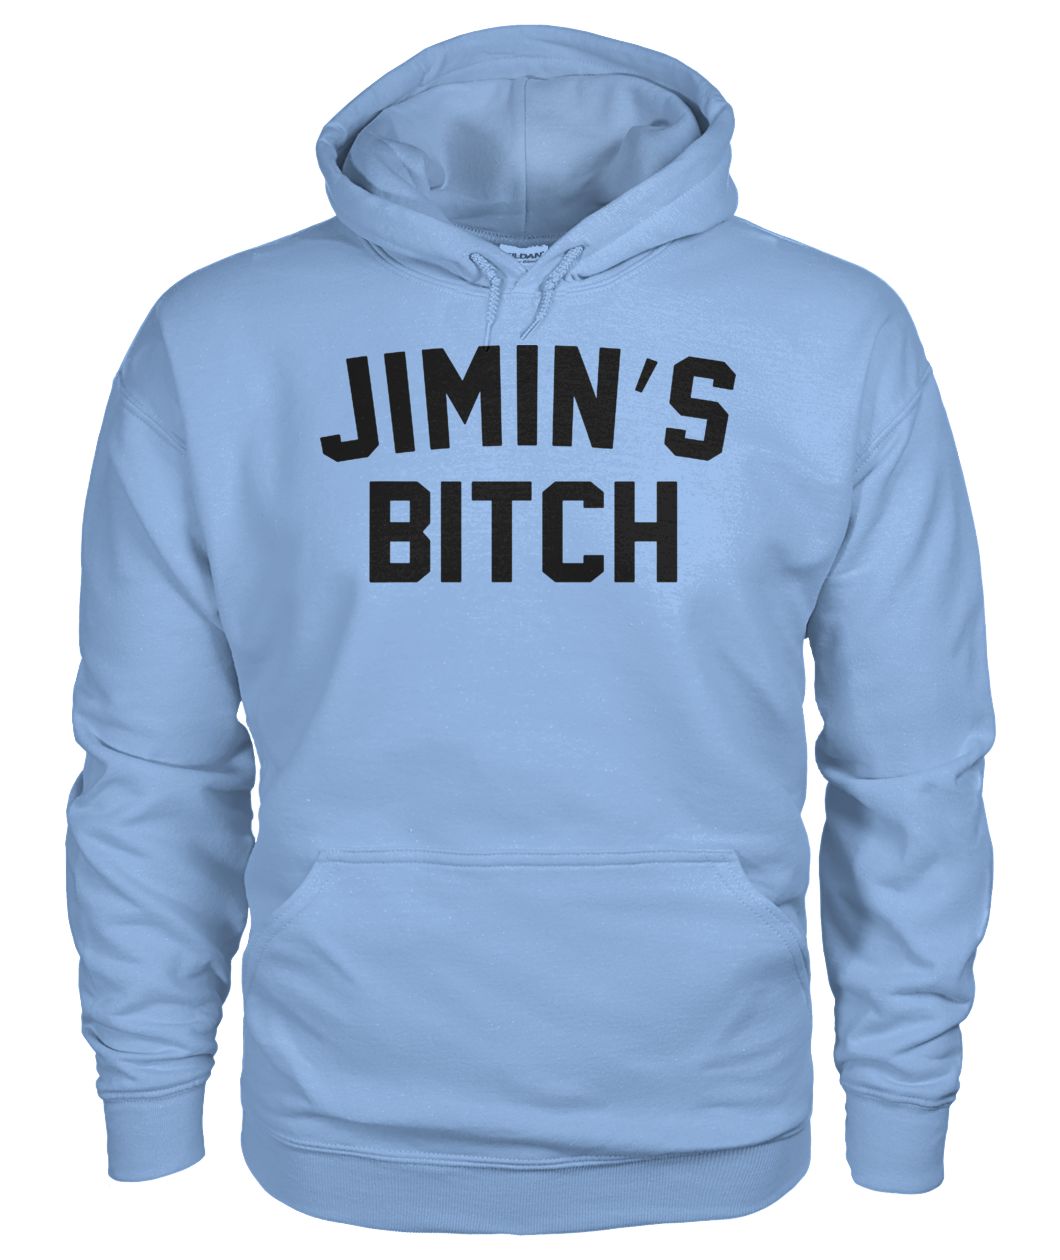 Jimin's bitch gildan hoodie